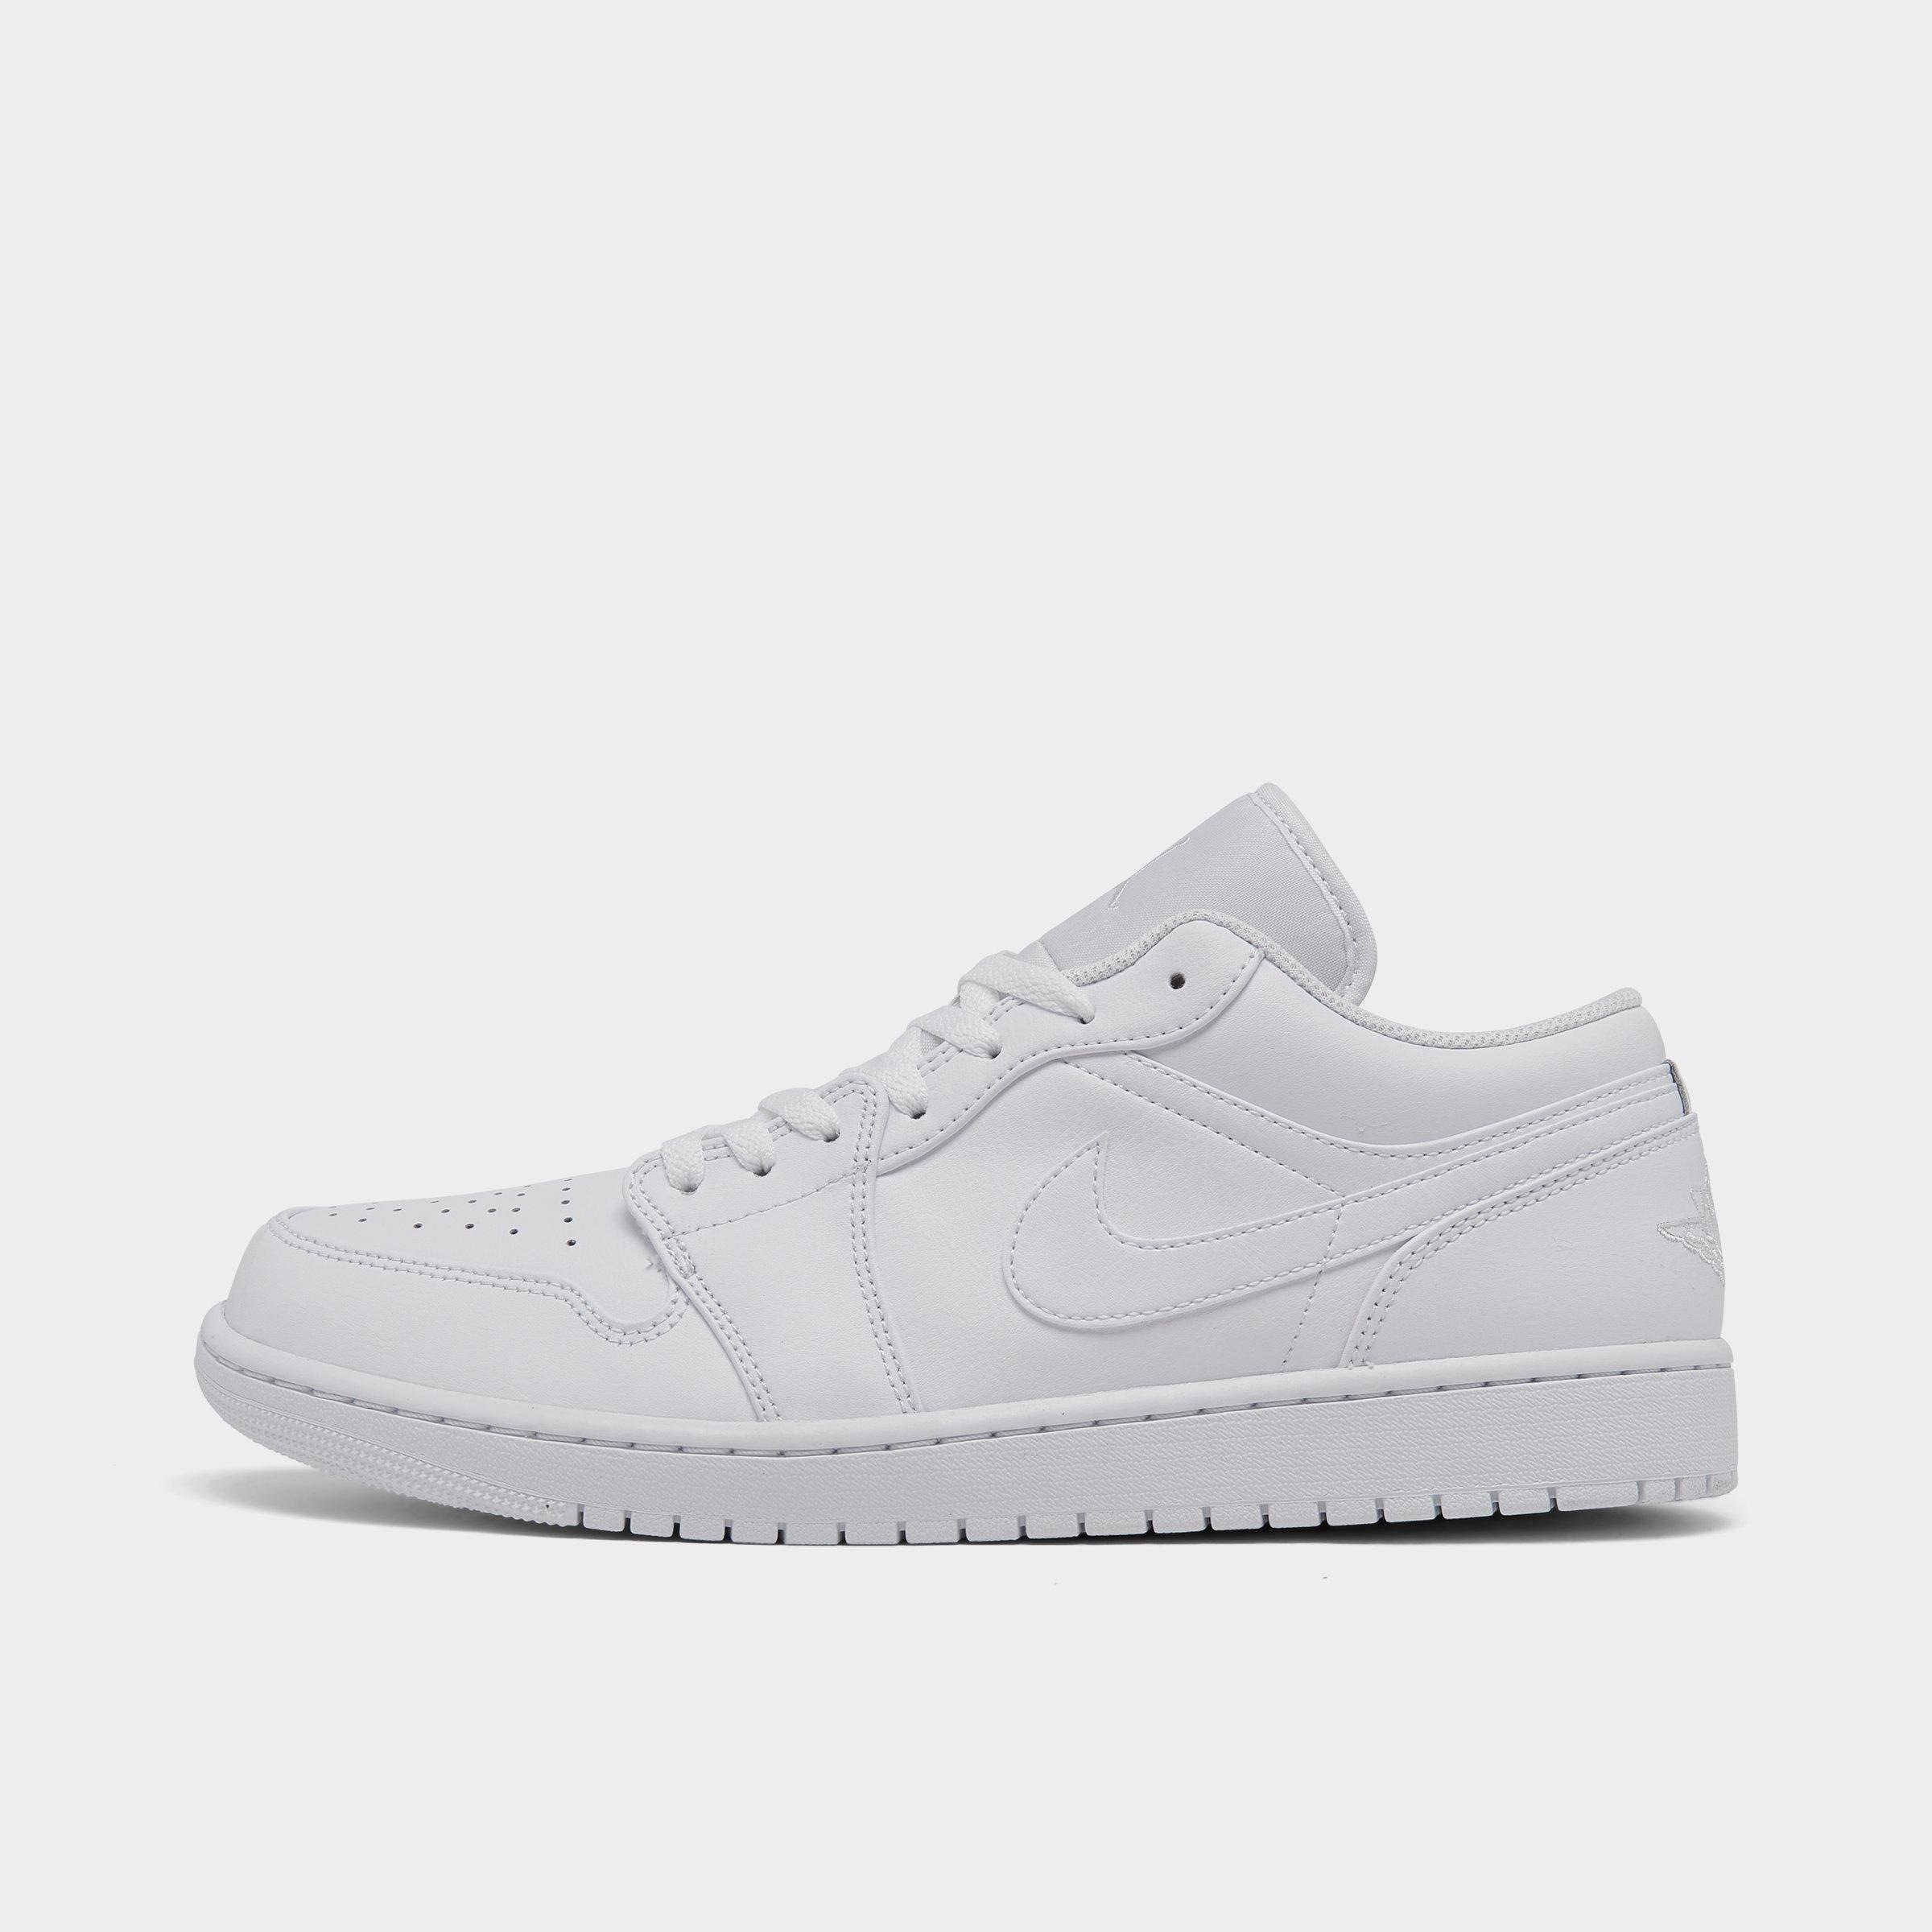 Nike Jordan Air Retro 1 Low Casual Shoes In White/white/white